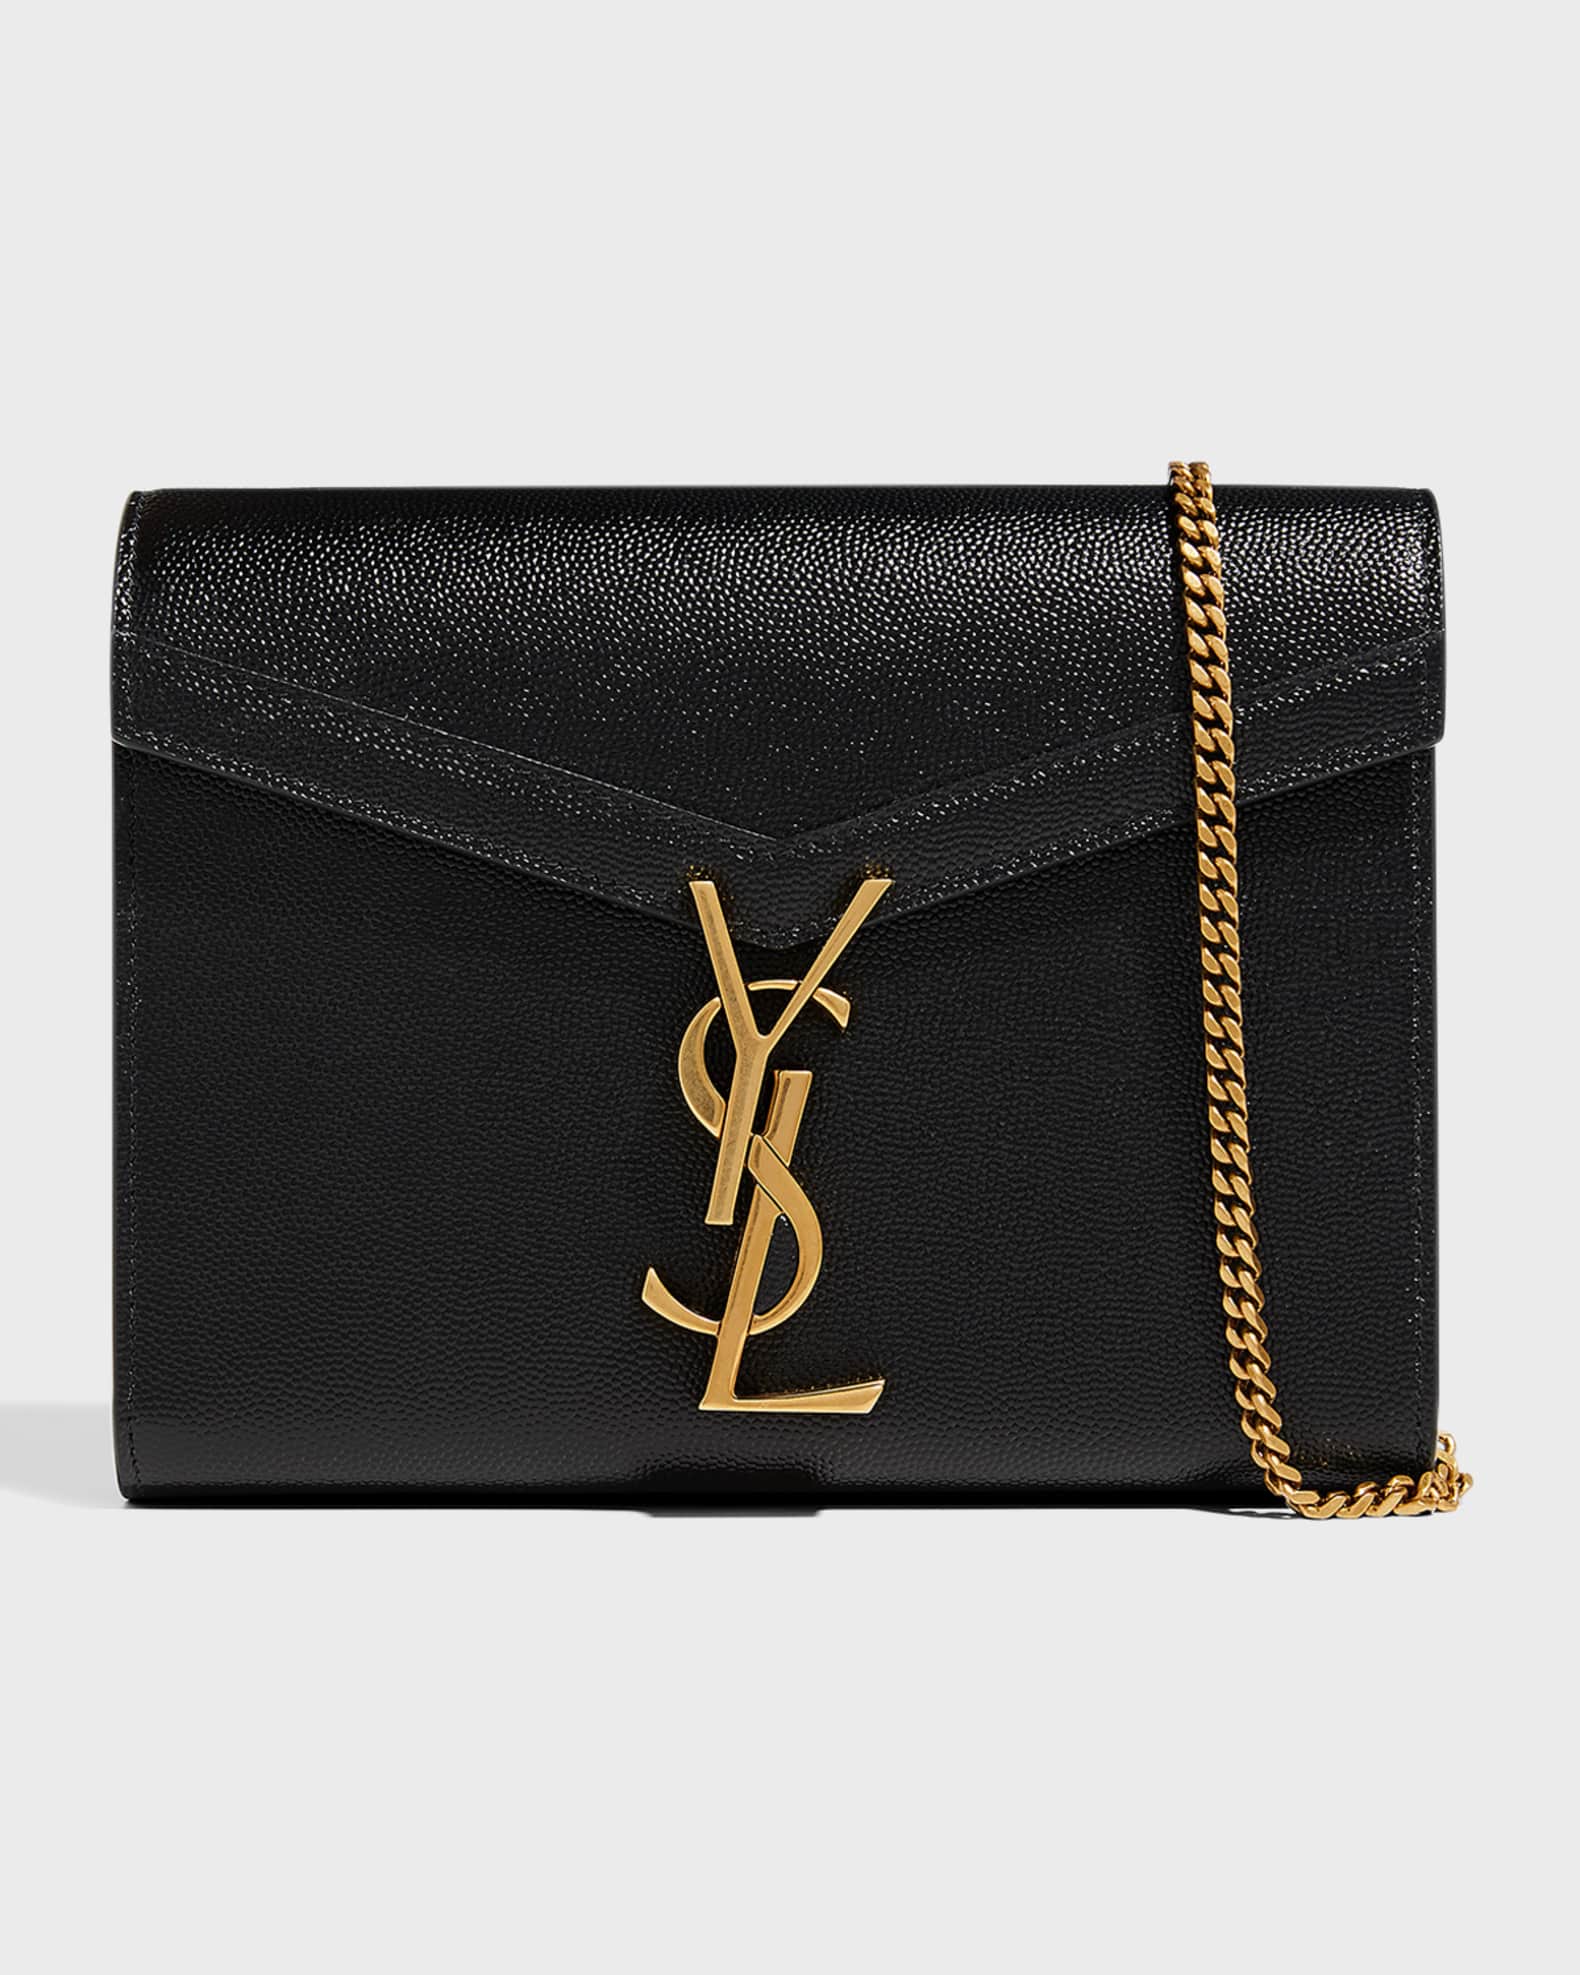 Louis Vuitton Galliera Bag: Stronger Than Diamonds